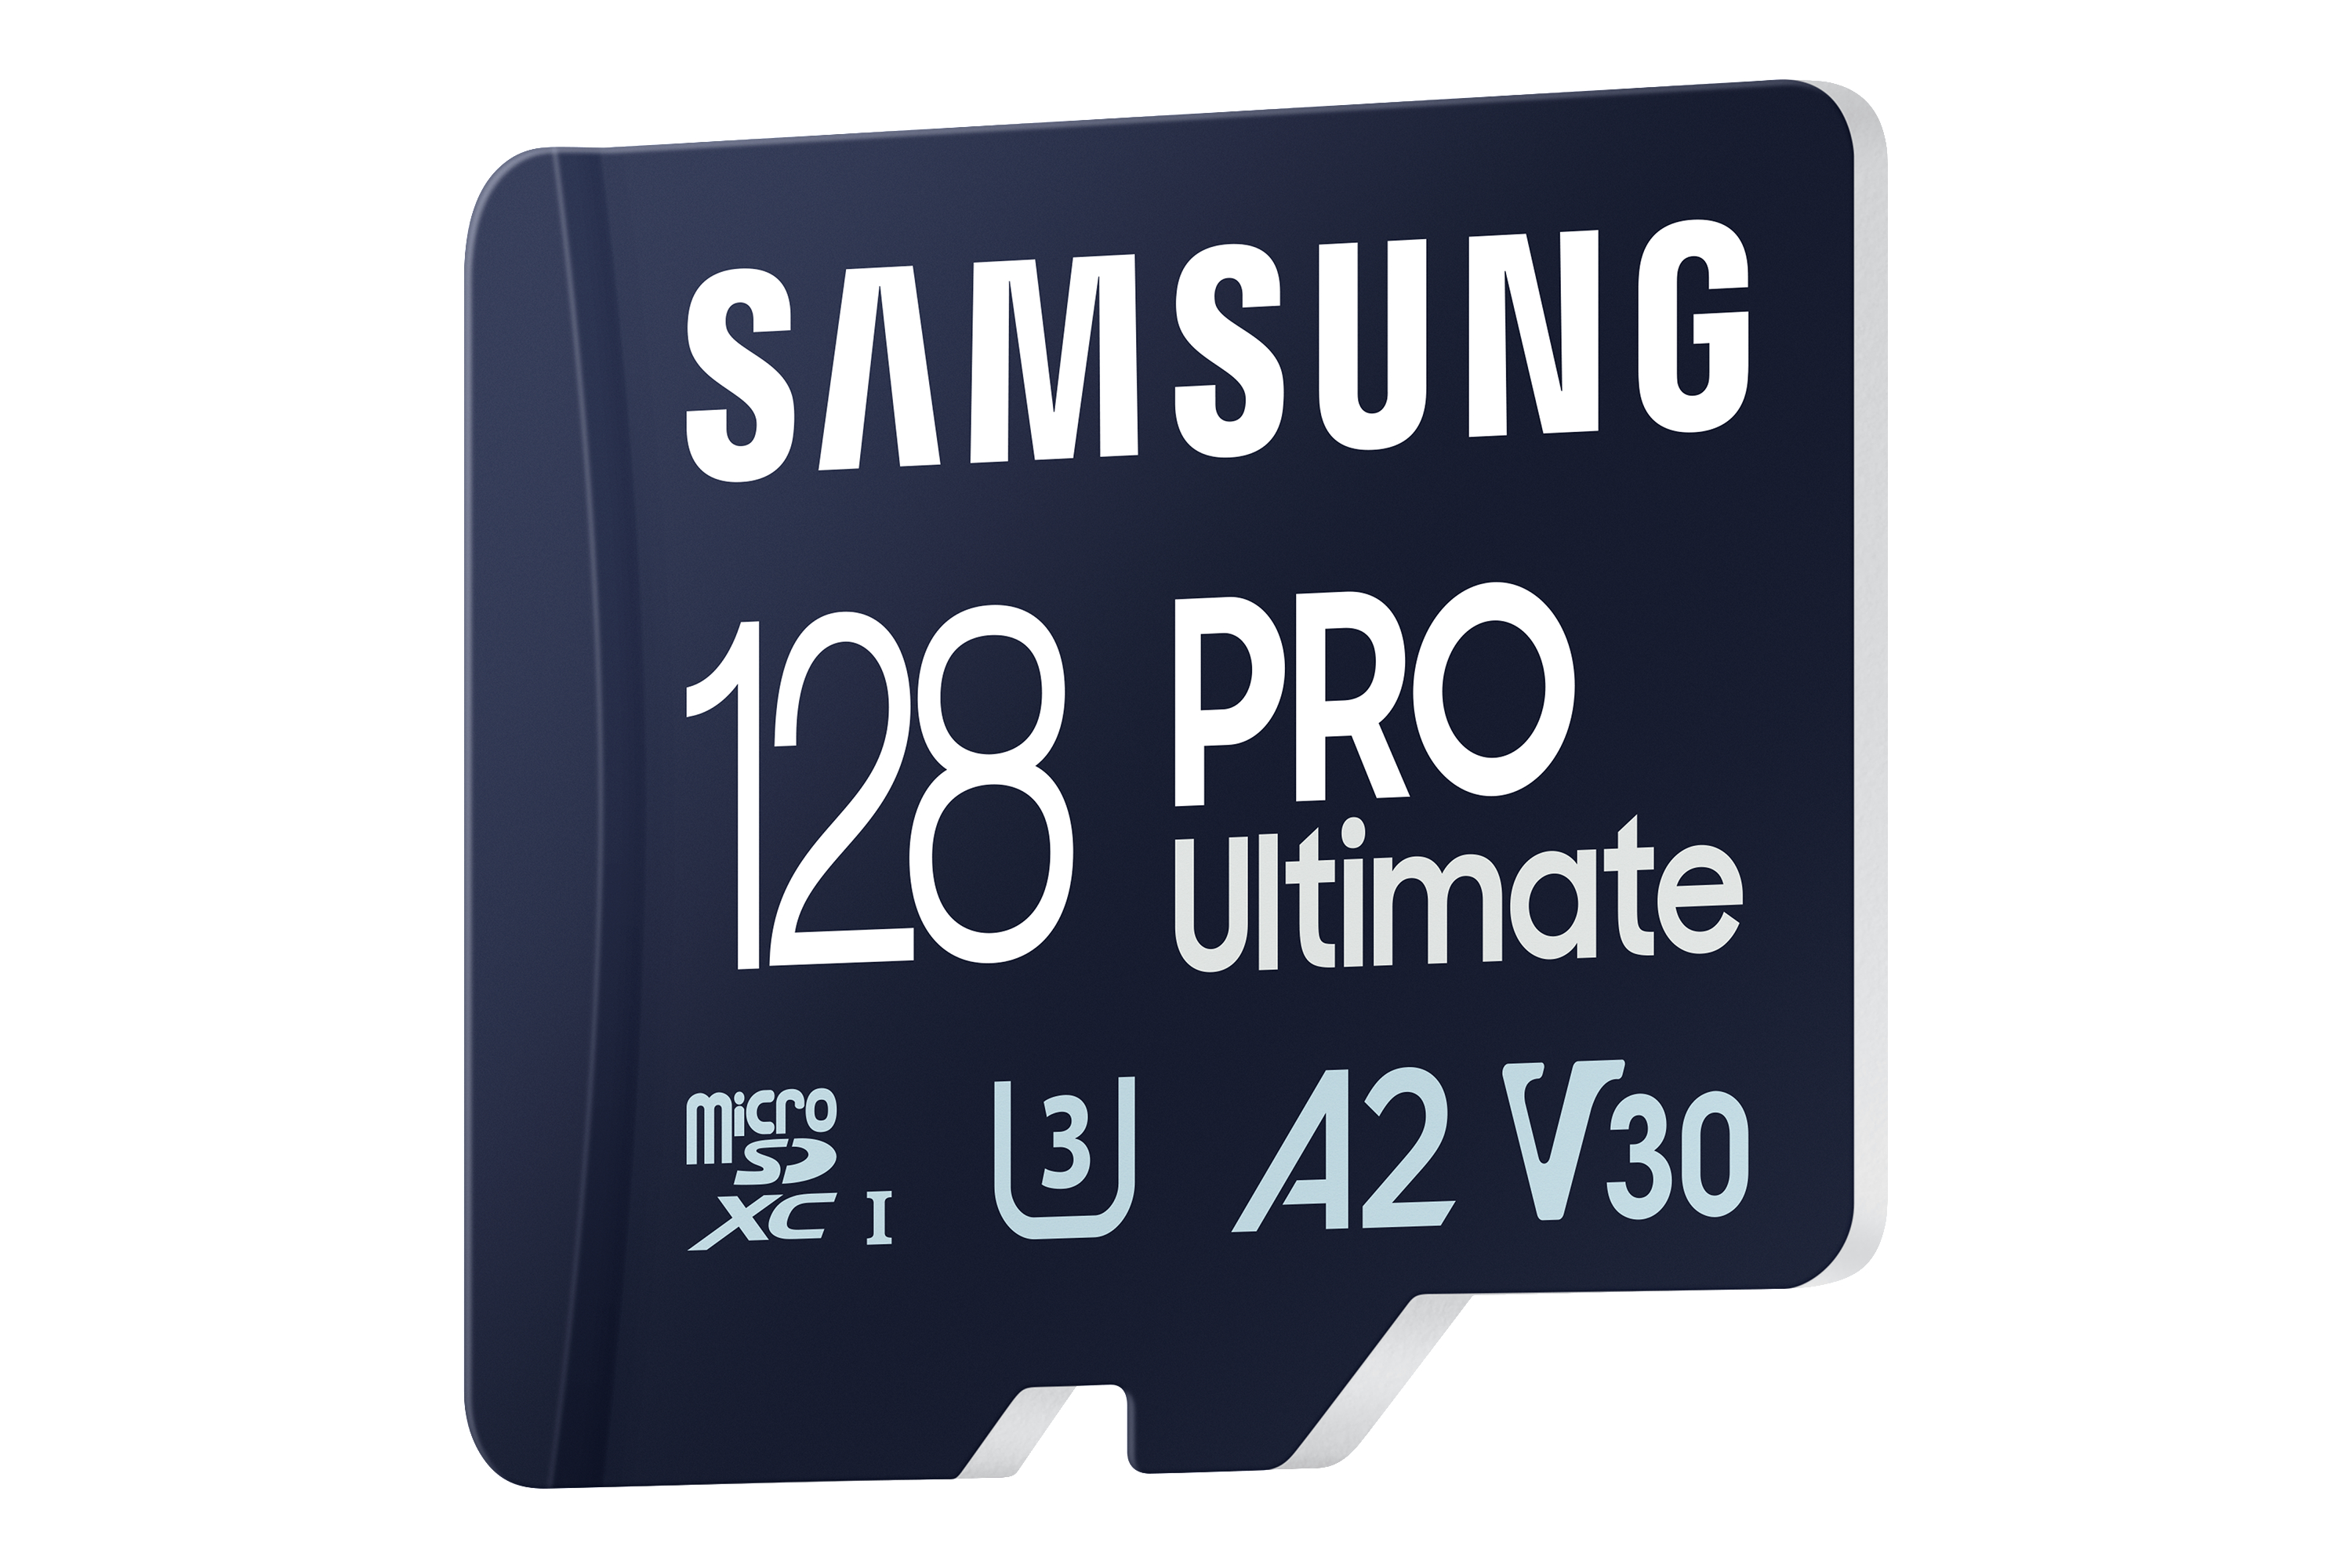 GB, 128 SAMSUNG Speicherkarte, 200 PRO MB/s Micro-SD Ultimate,